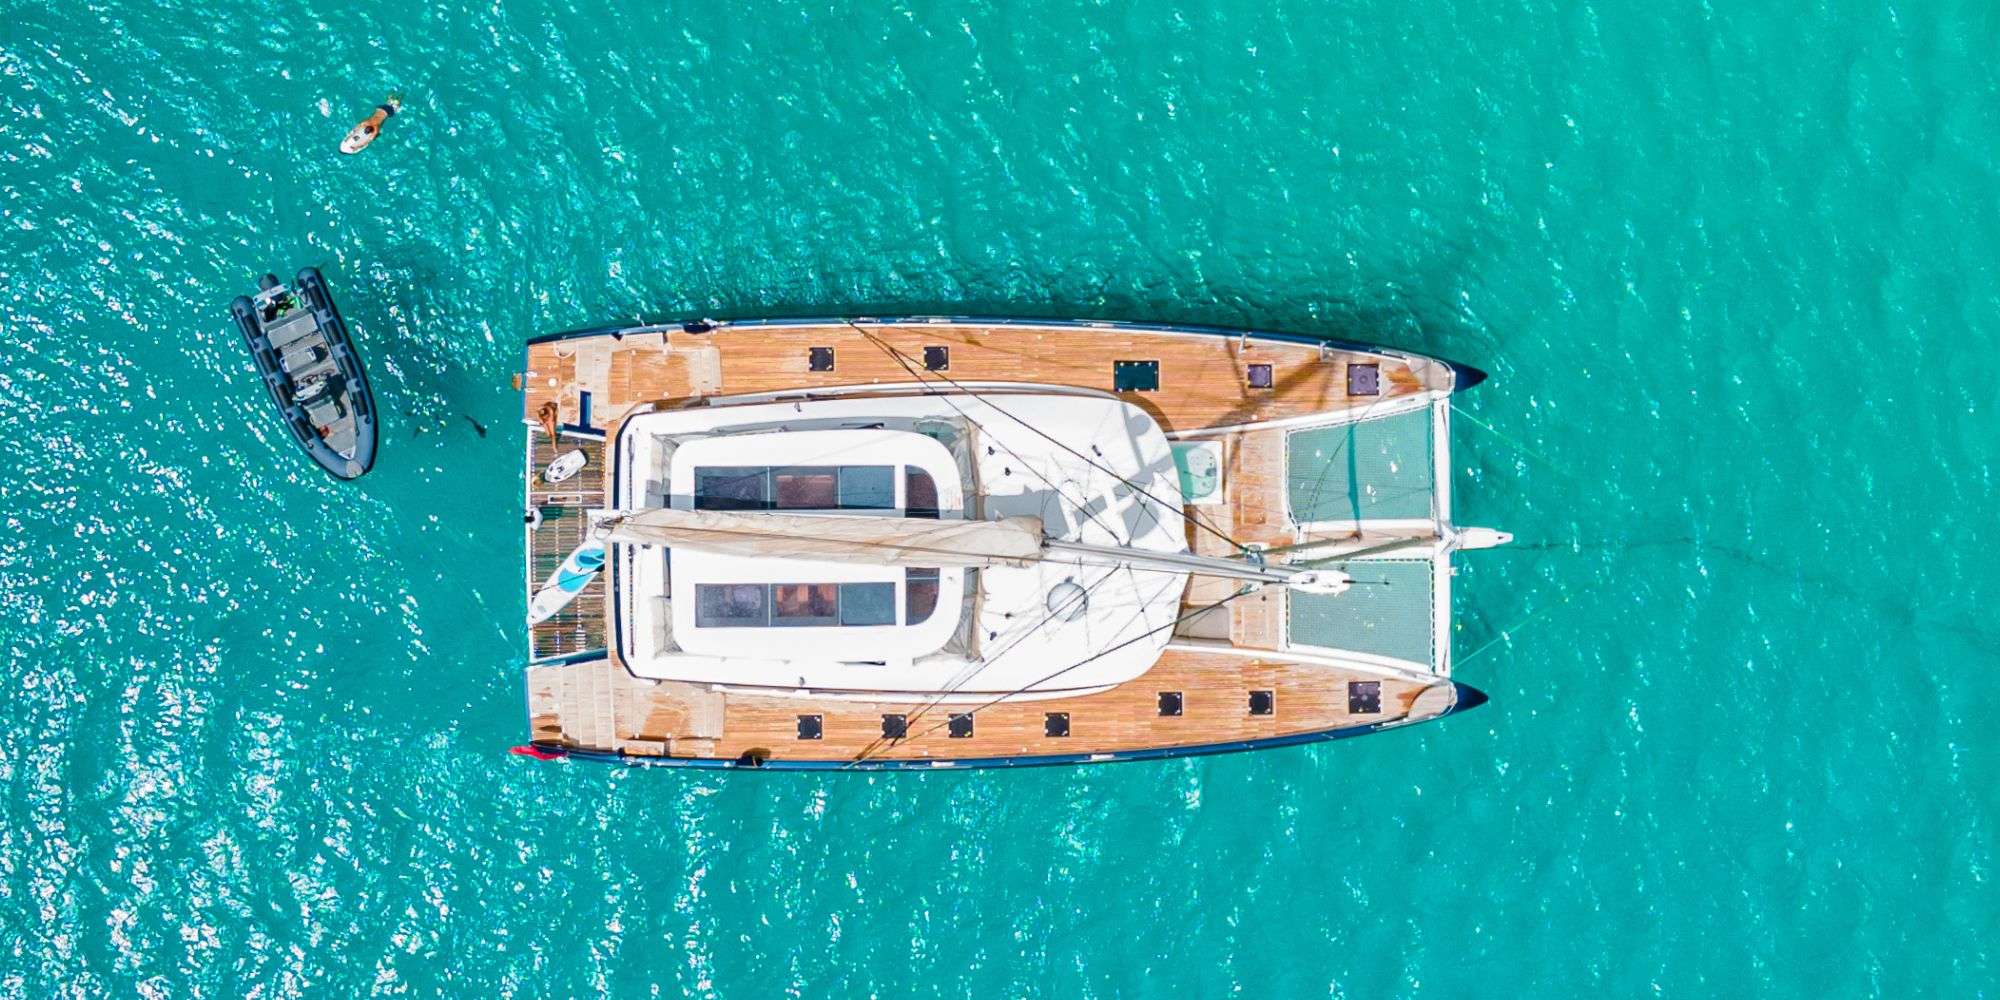 MANE ET NOCTE - Luxury yacht charter Seychelles & Boat hire in Indian Ocean & SE Asia 2